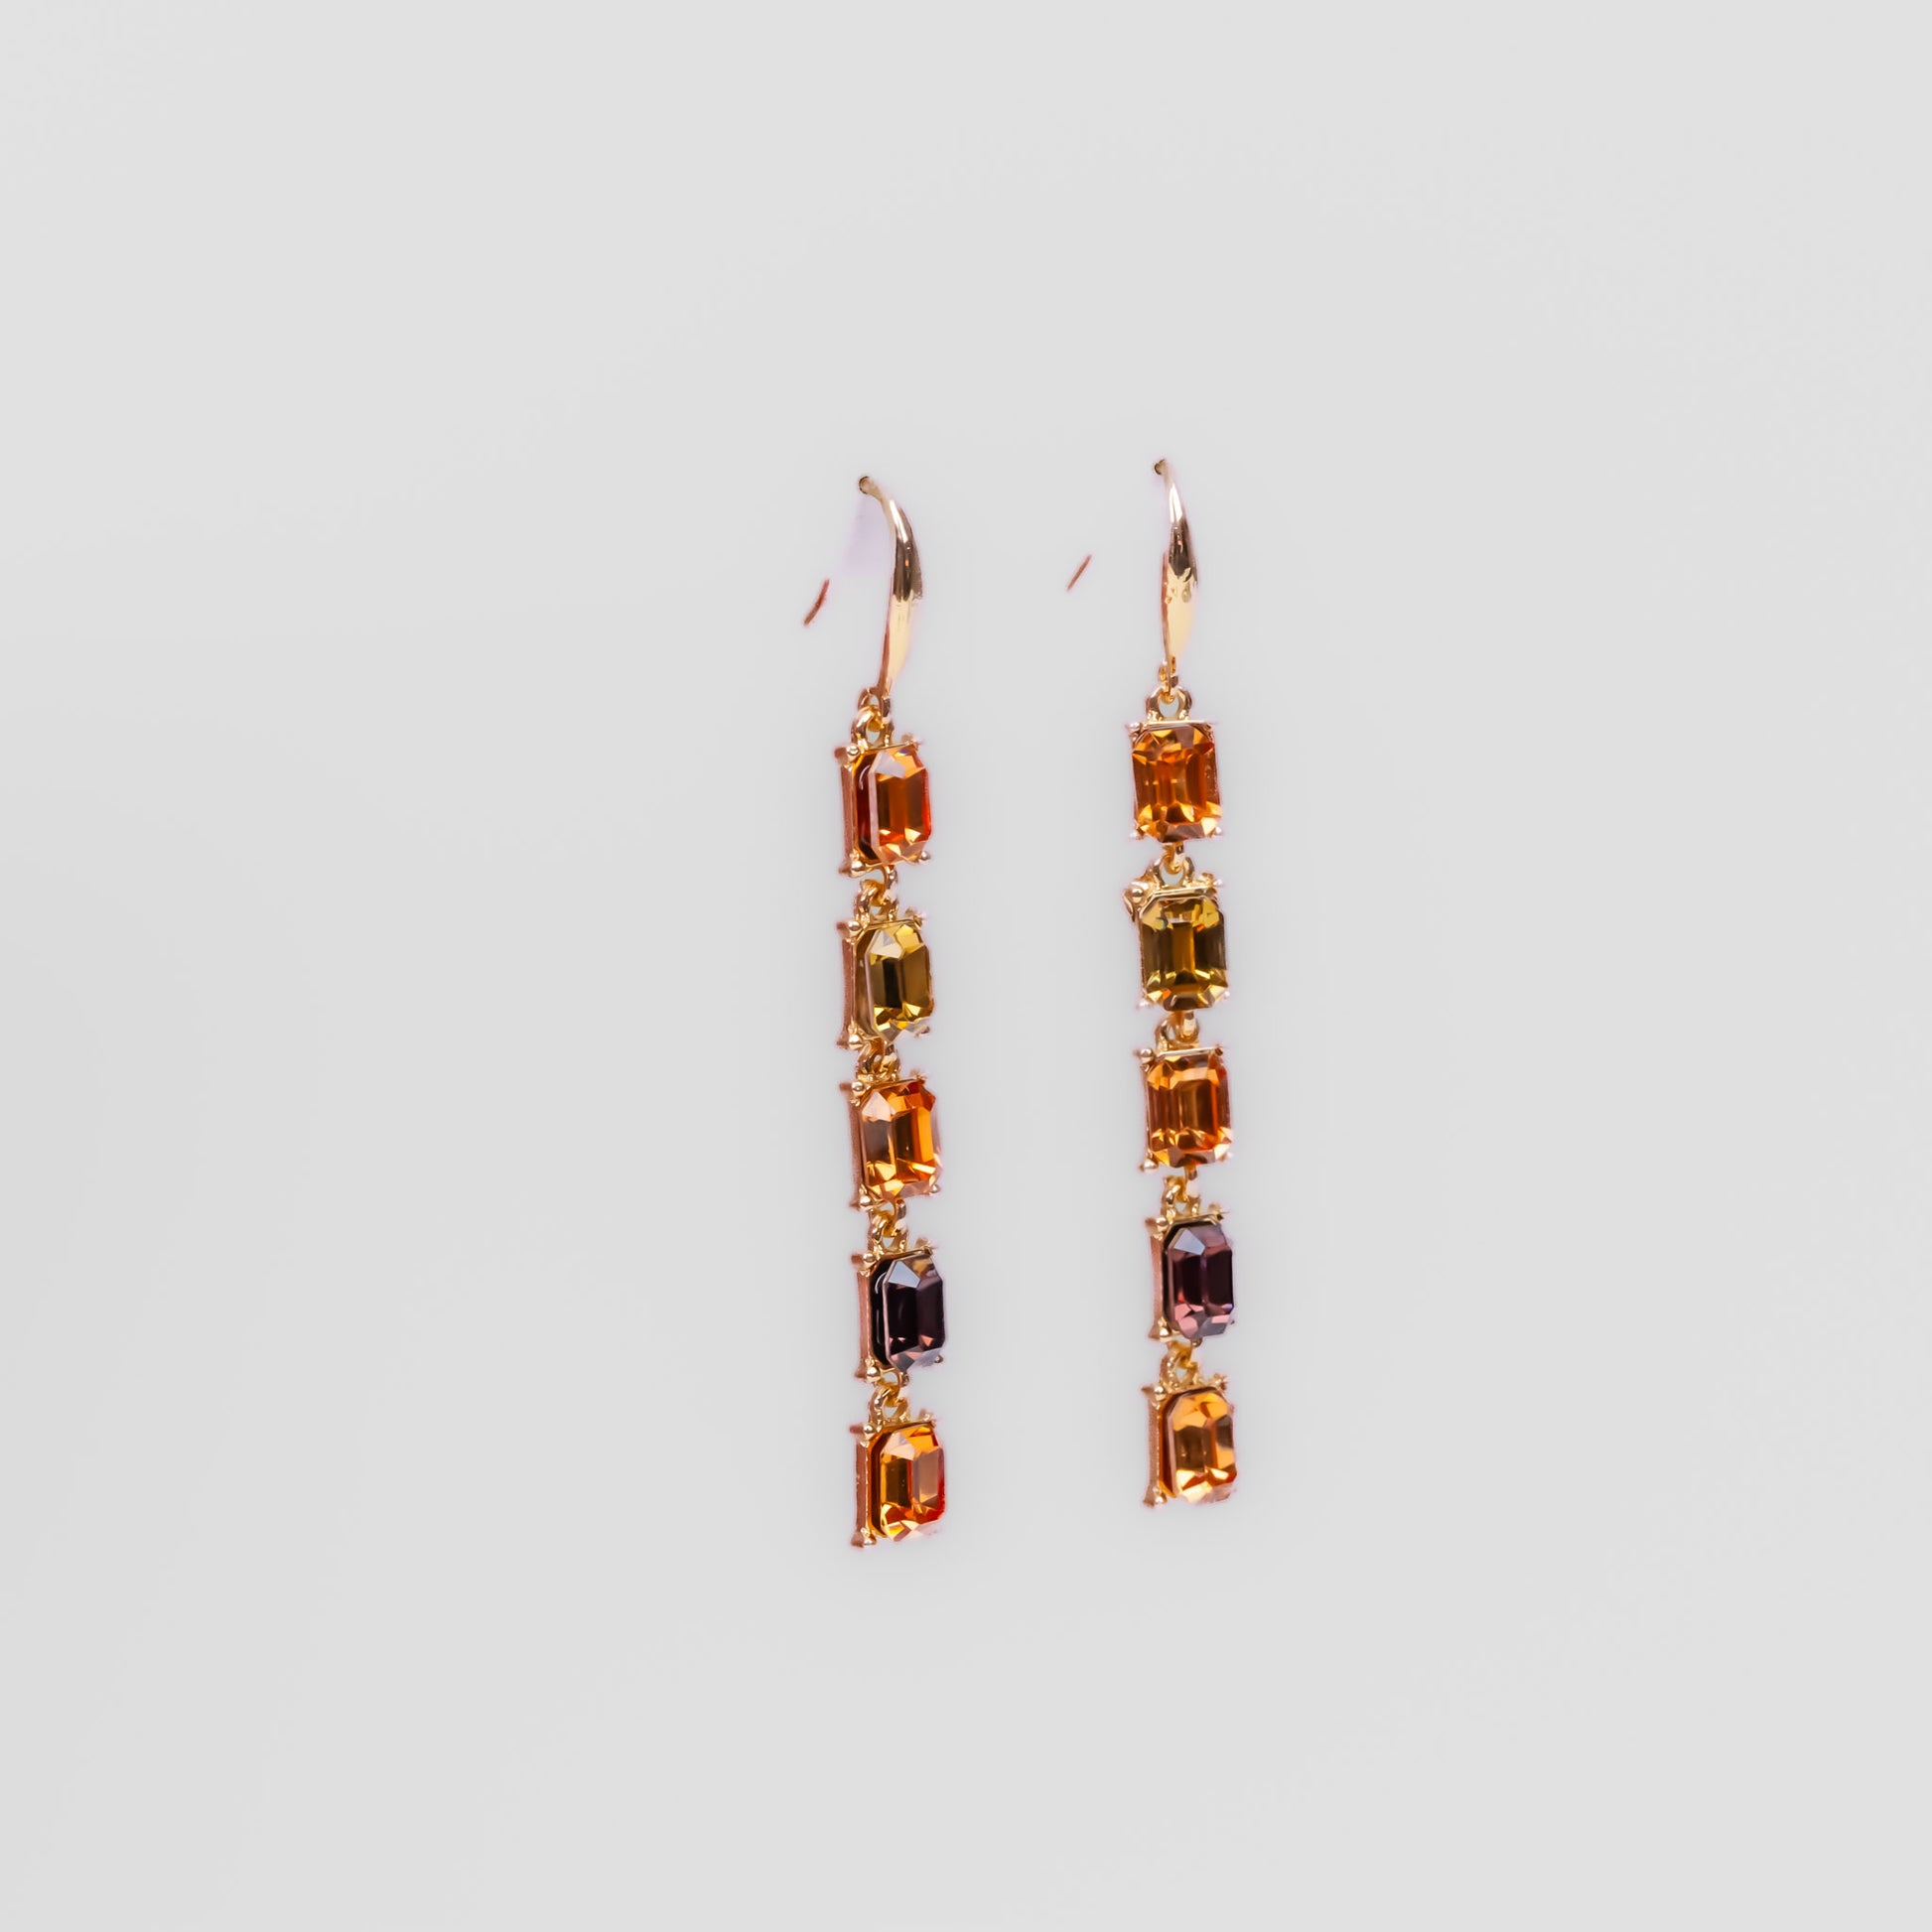 Cercei lungi eleganți pe lanț cu pietre colorate - Champagne, Auriu